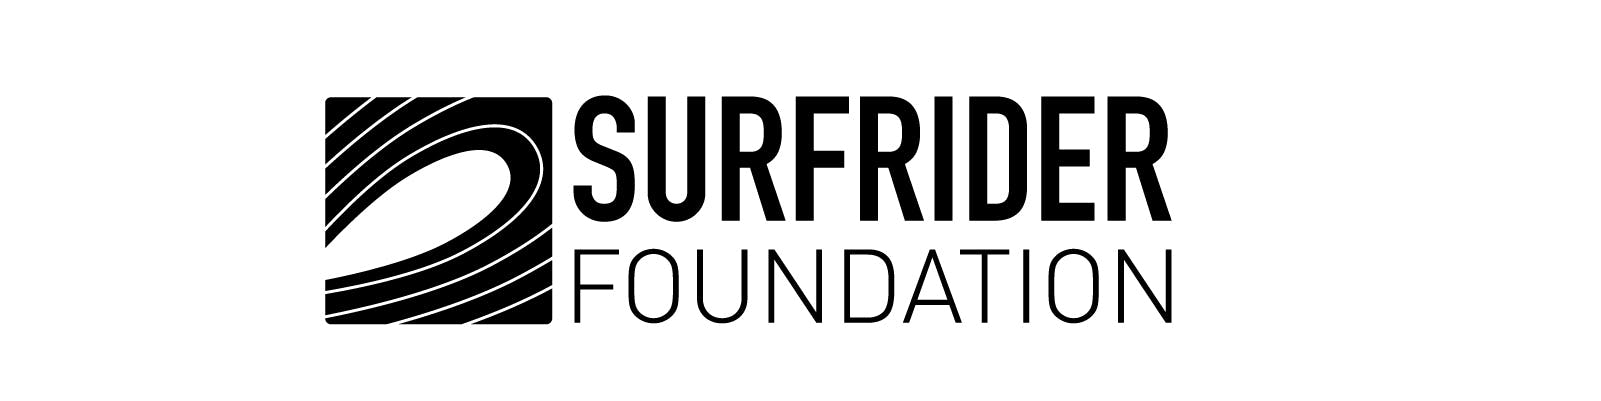 Surfrider Foundation logo